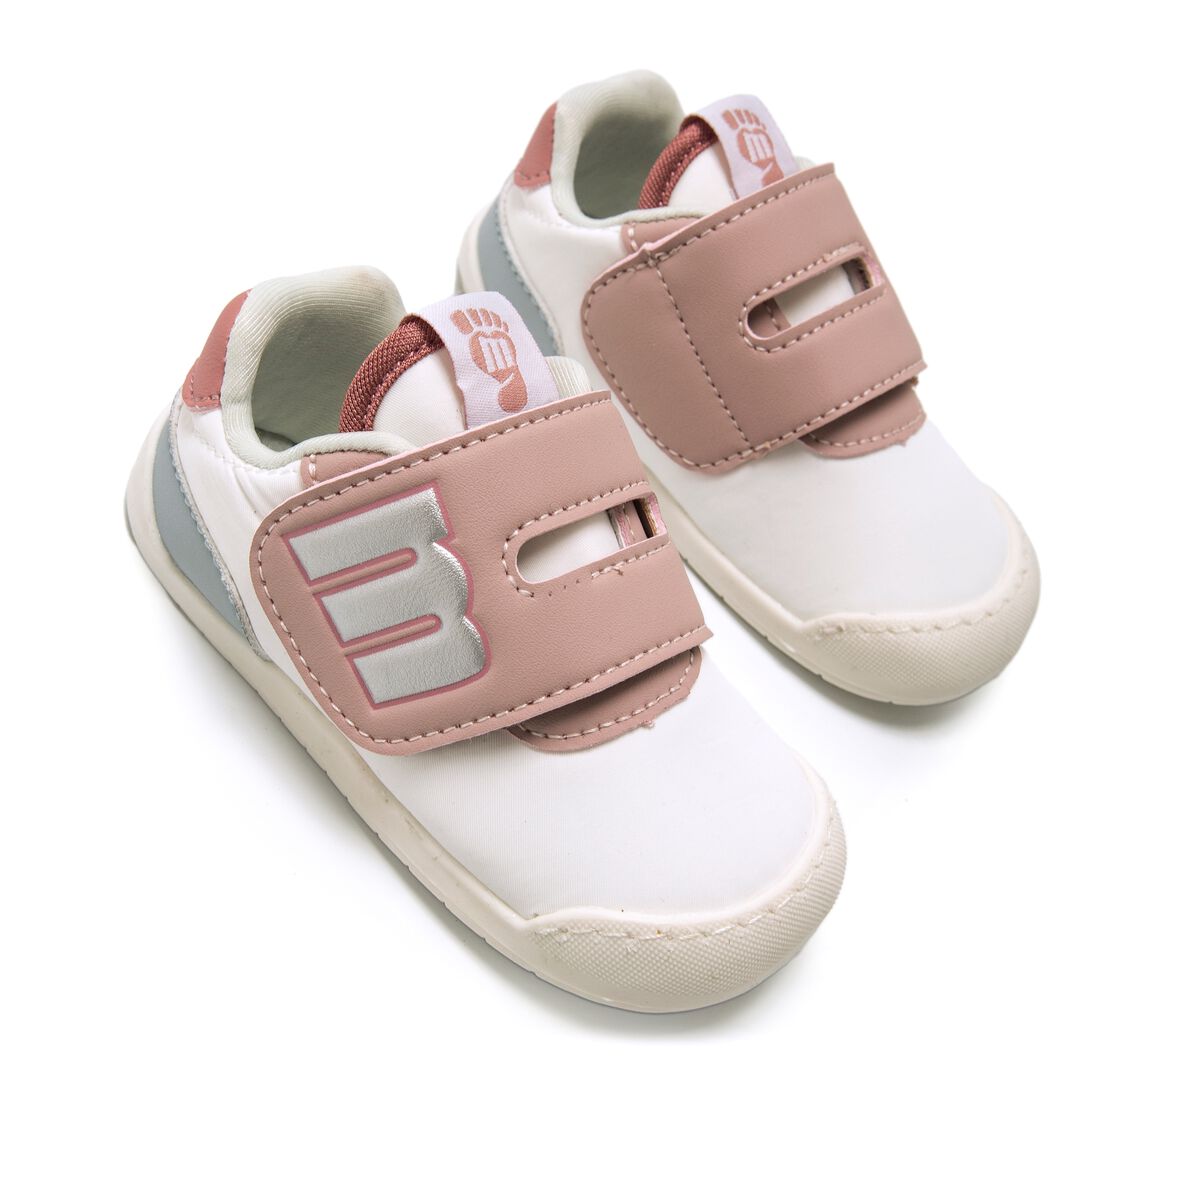 Sneakers de Rapariga modelo FREE BABY de MTNG image number 5